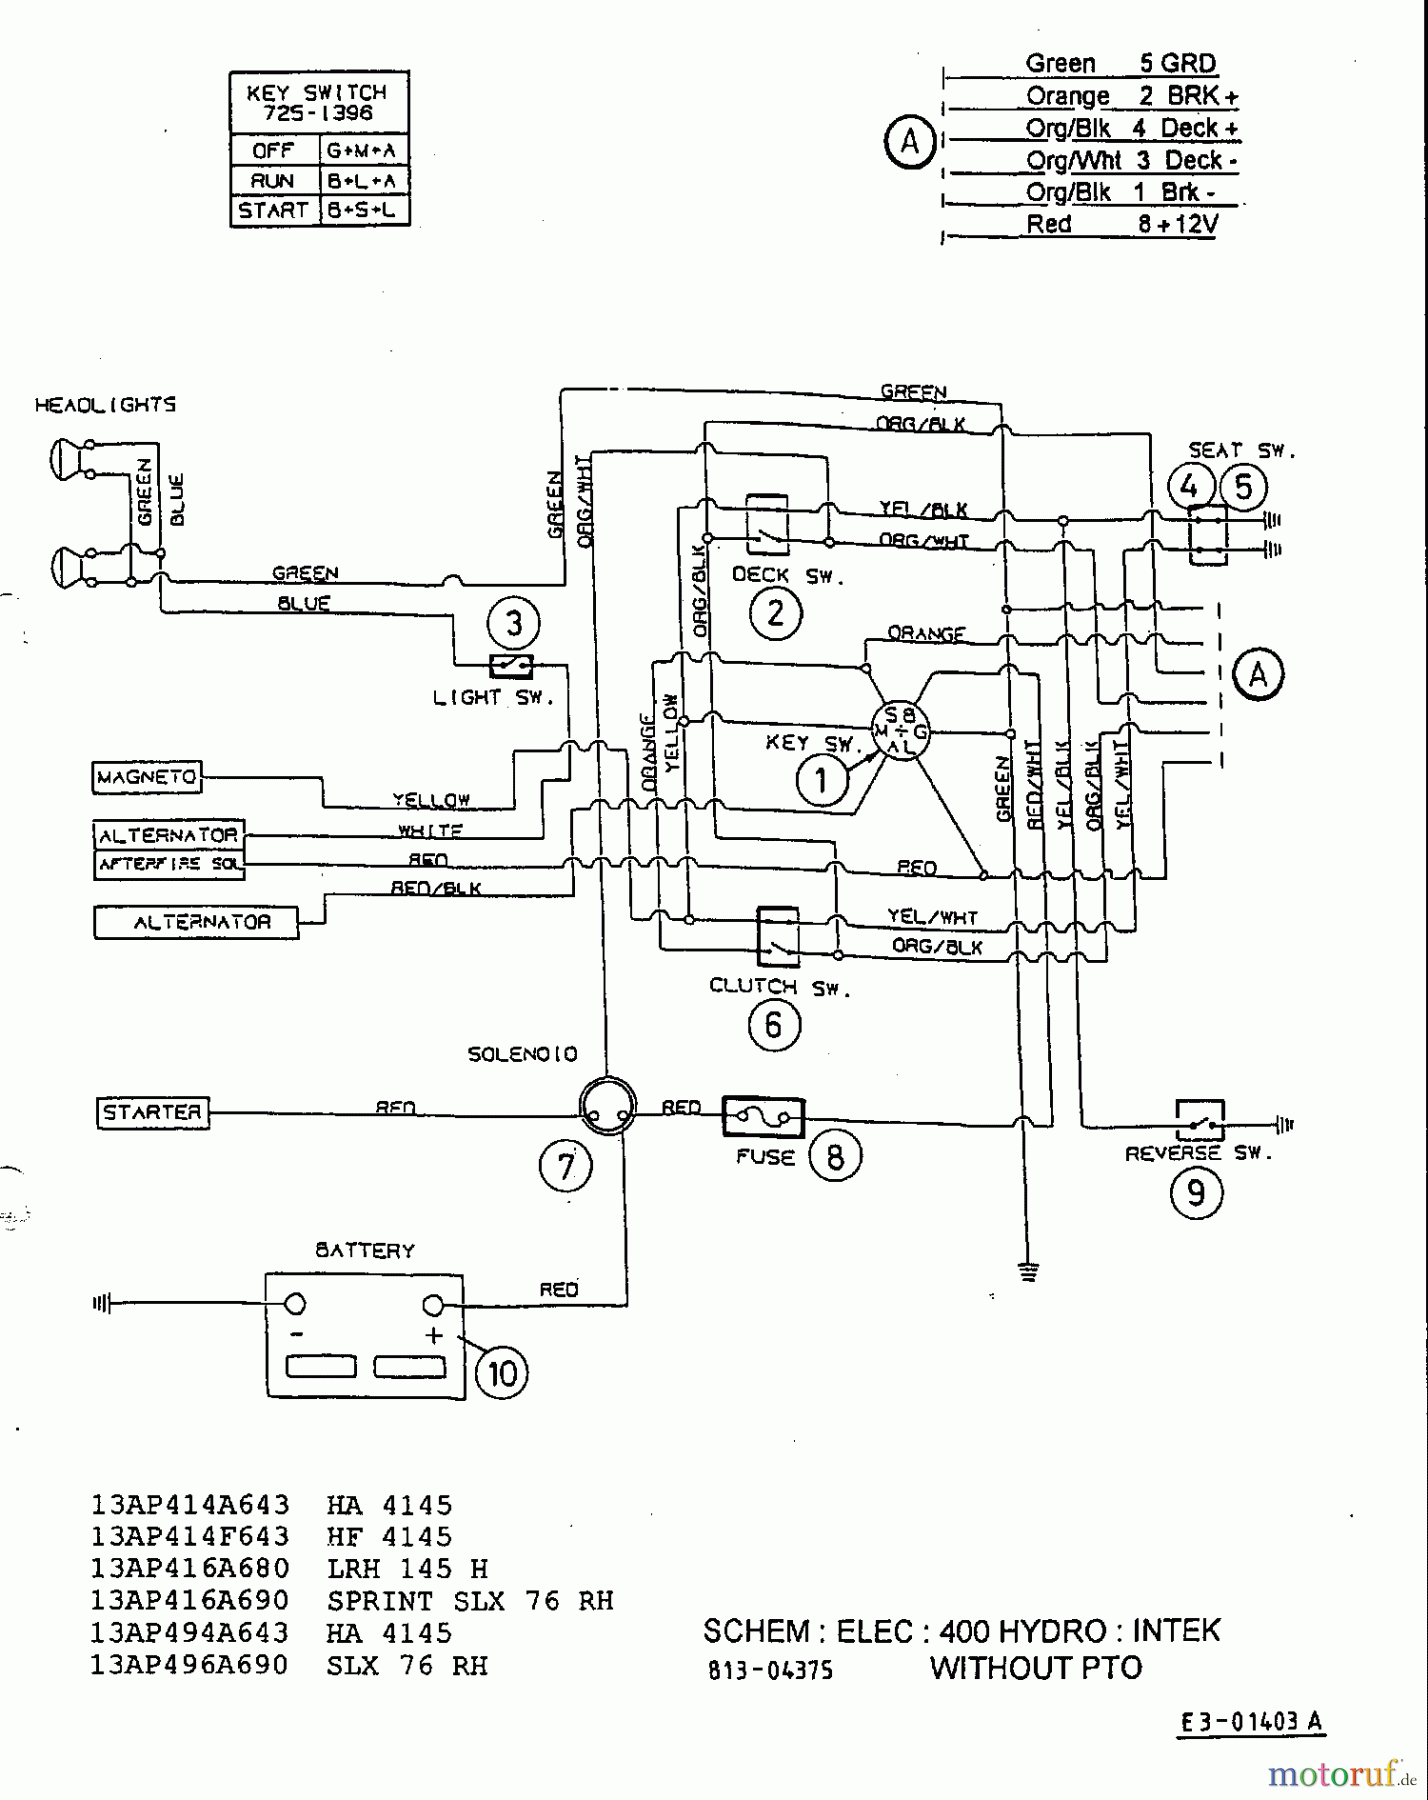  Yard-Man Rasentraktoren HA 4135 13AA414A643  (2002) Schaltplan Intek ohne Elektromagnetkupplung